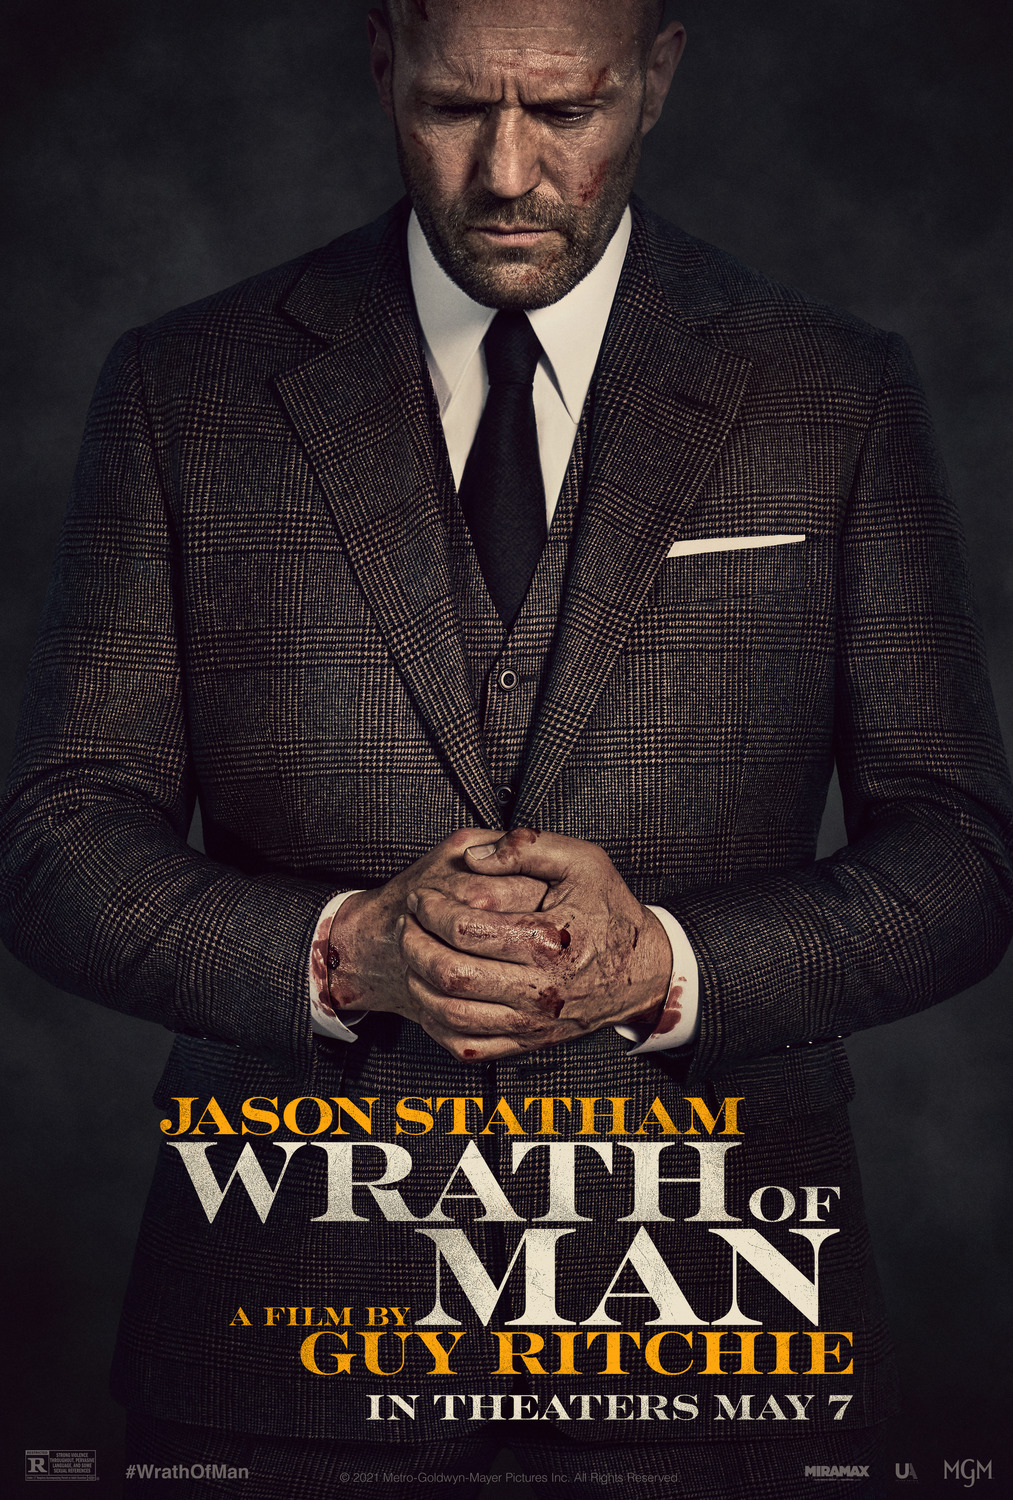 WRATH OF MAN – The Movie Spoiler